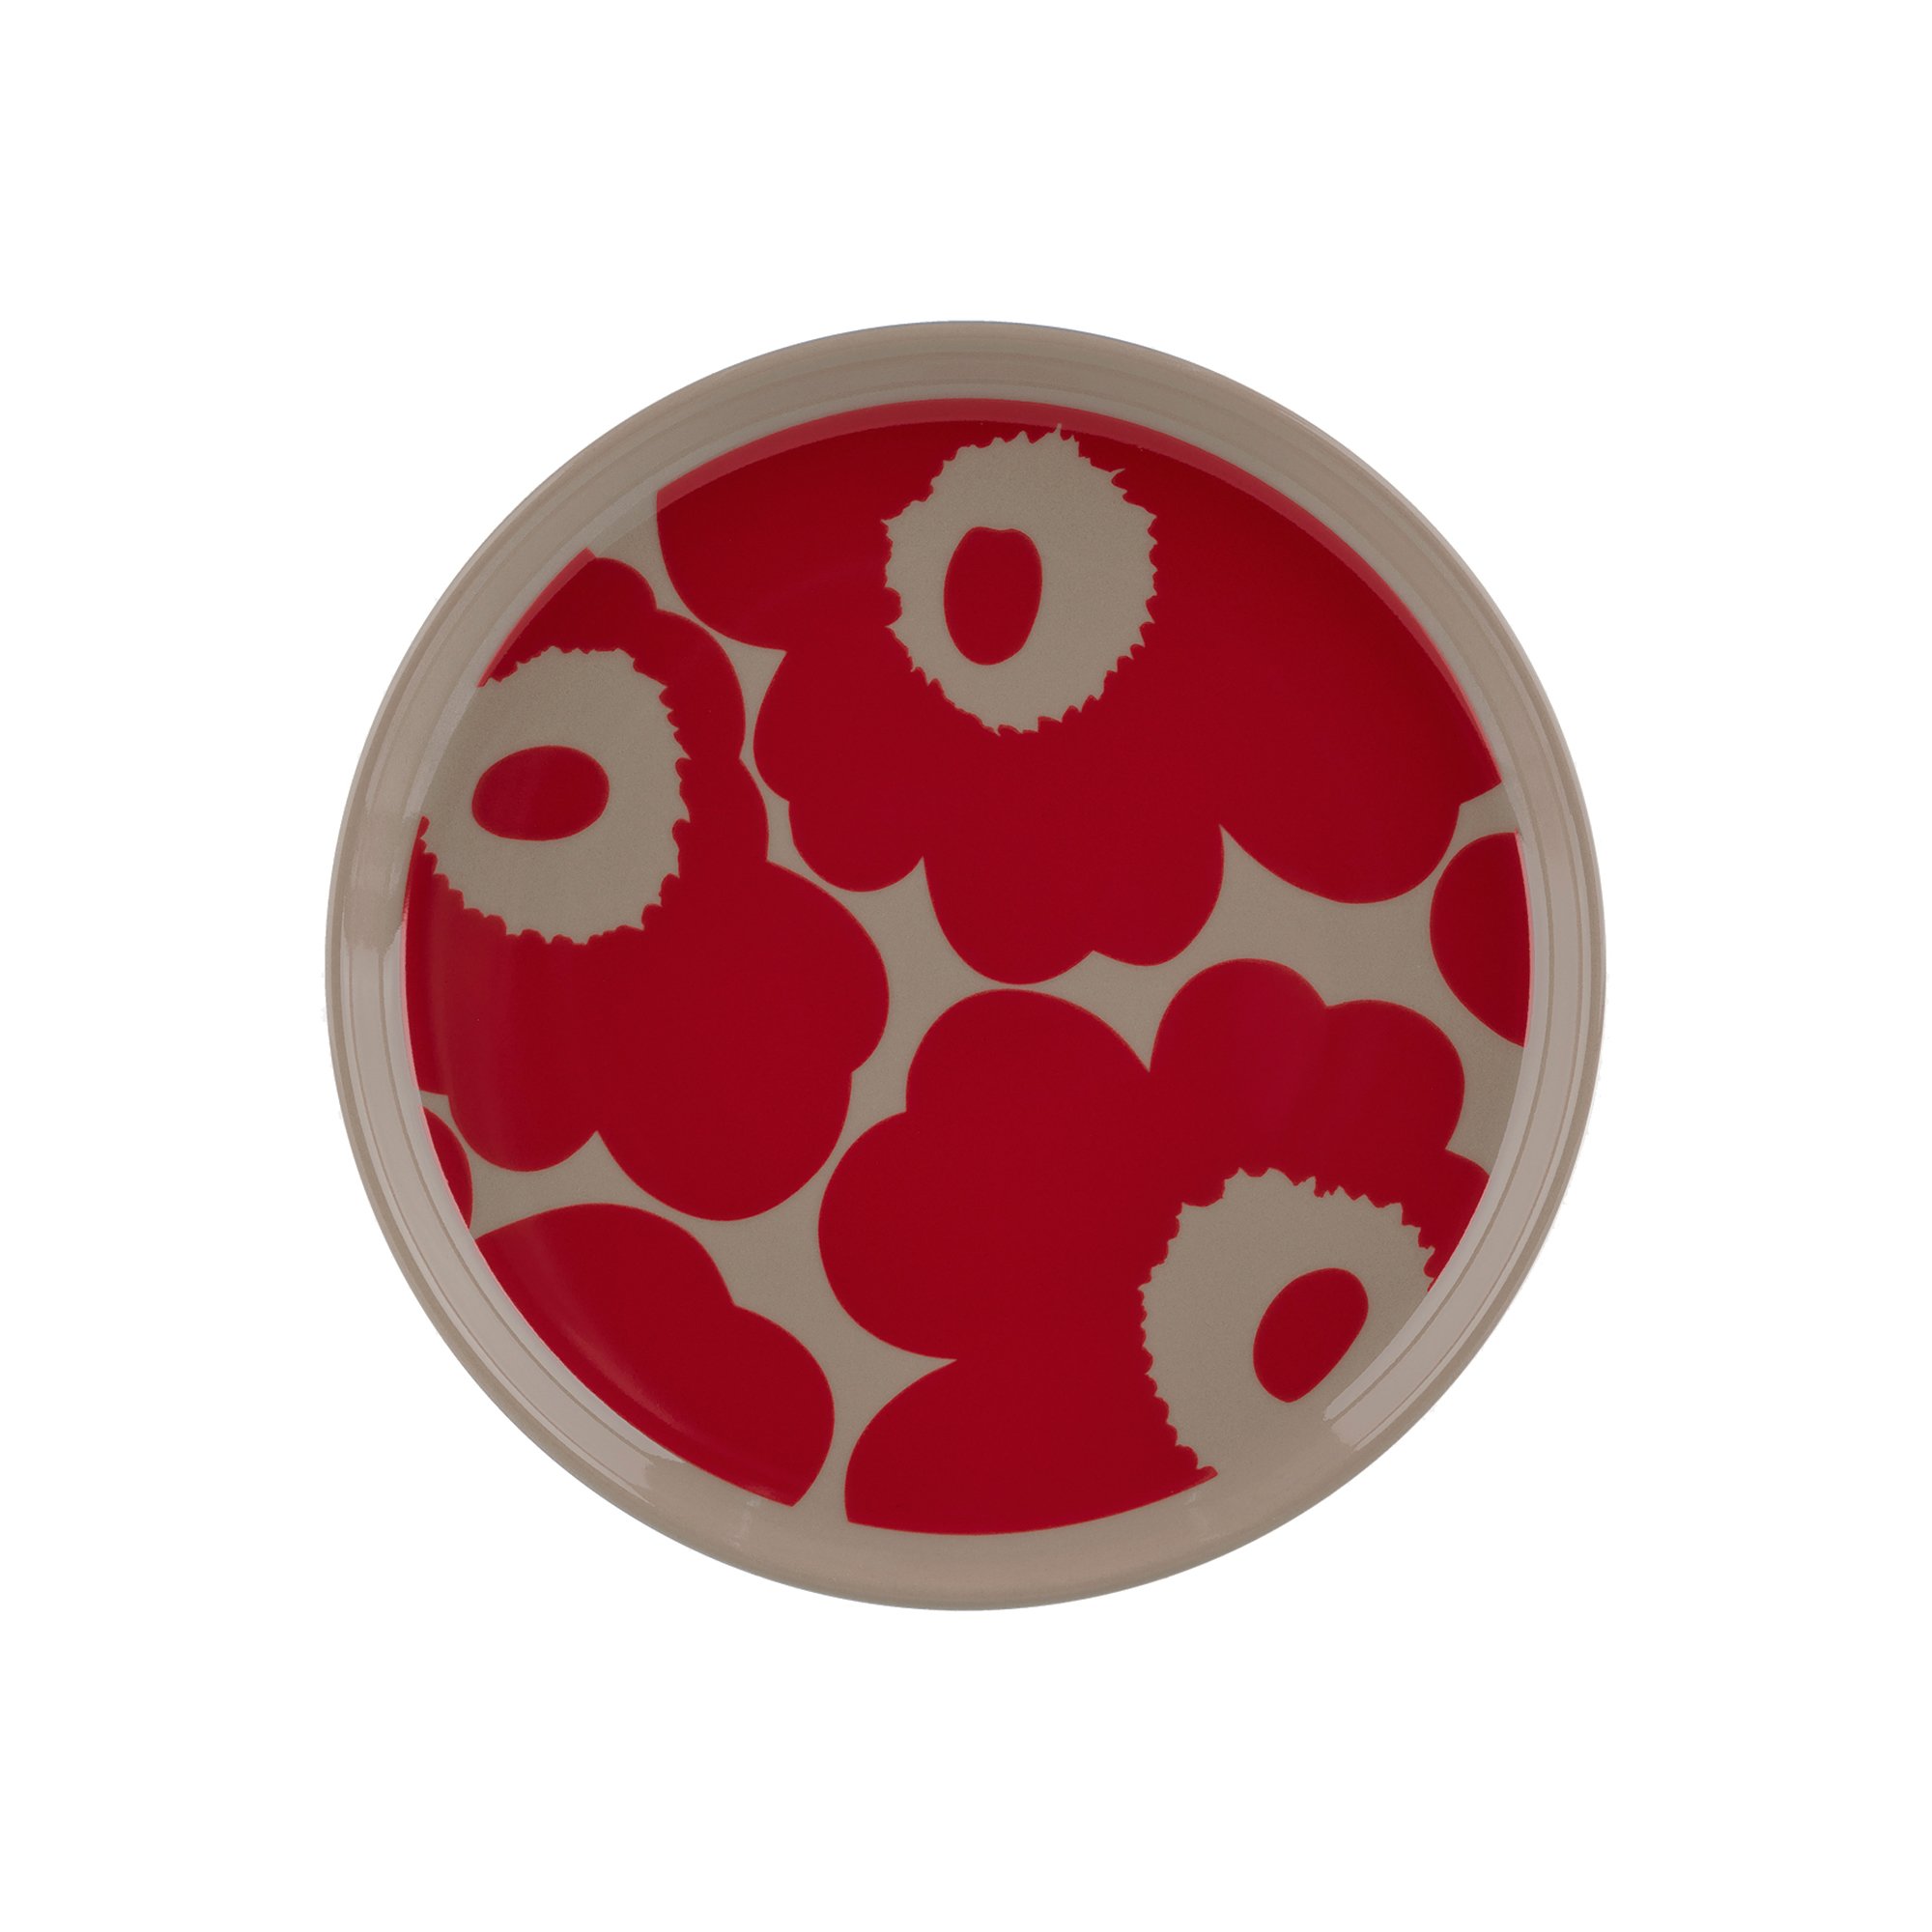 Marimekko Unikko tallerken 13,5 cm, terra red